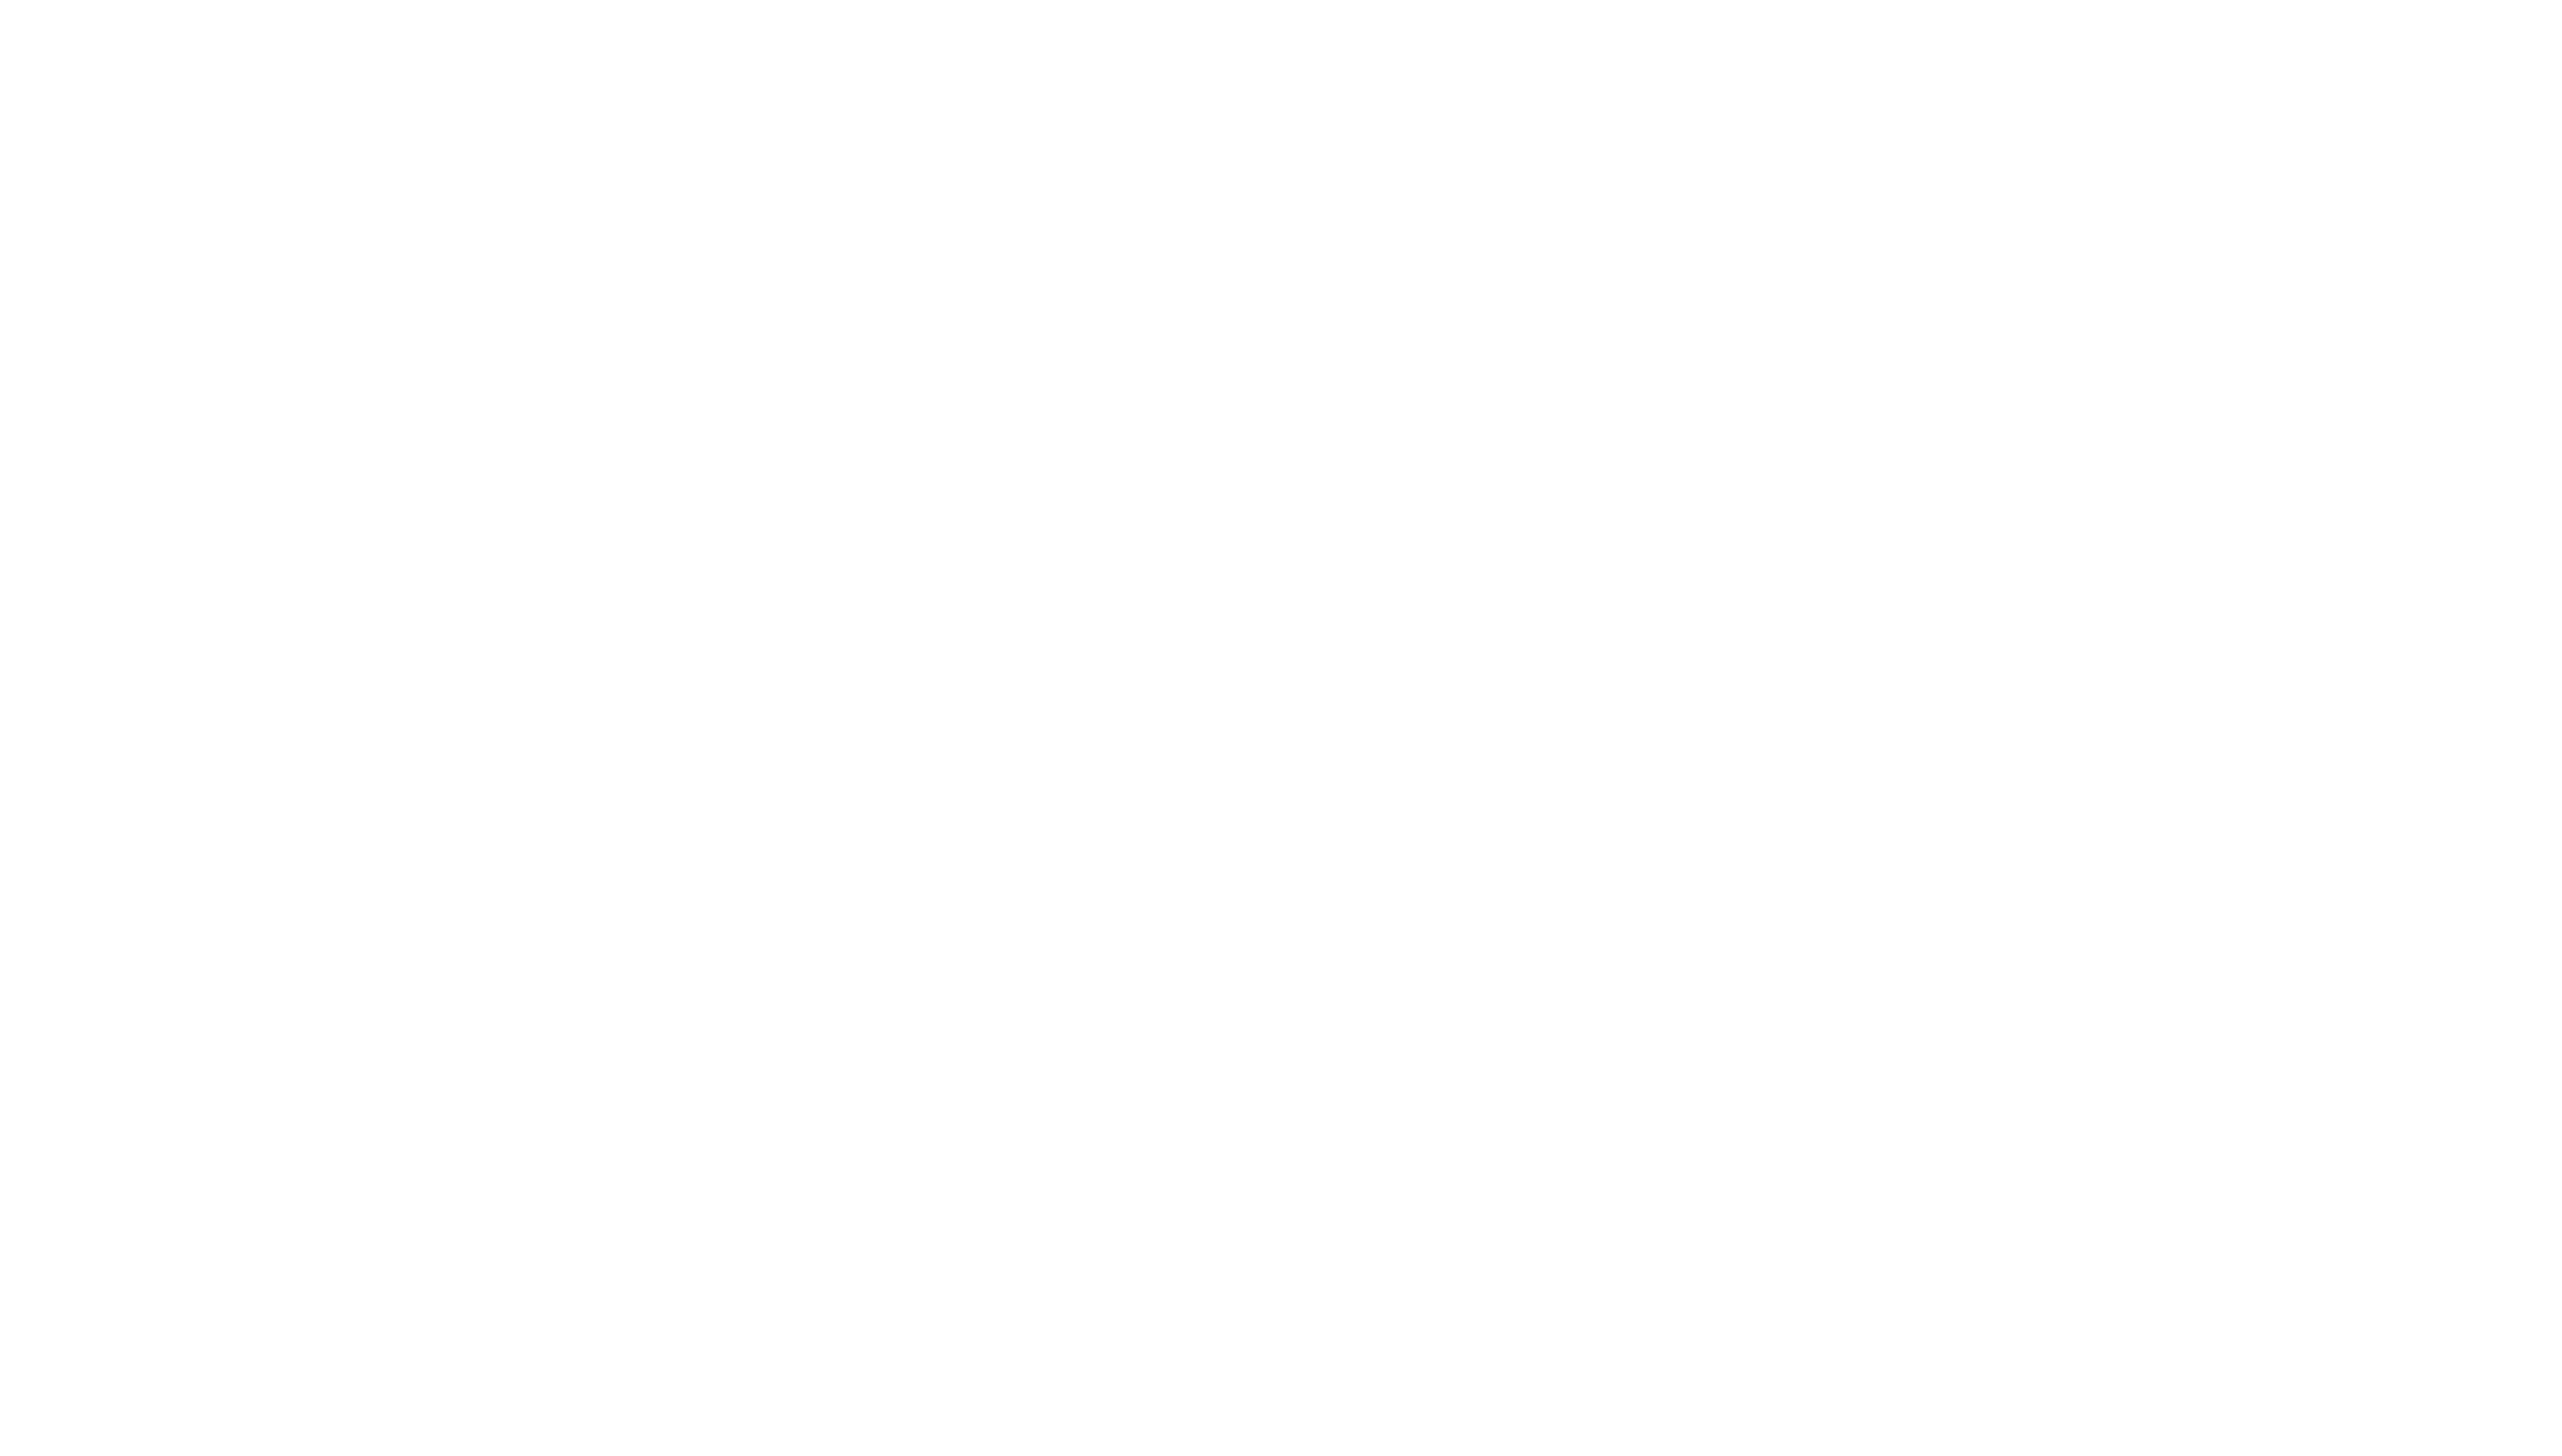 UNYT | Web & Marketing Logo